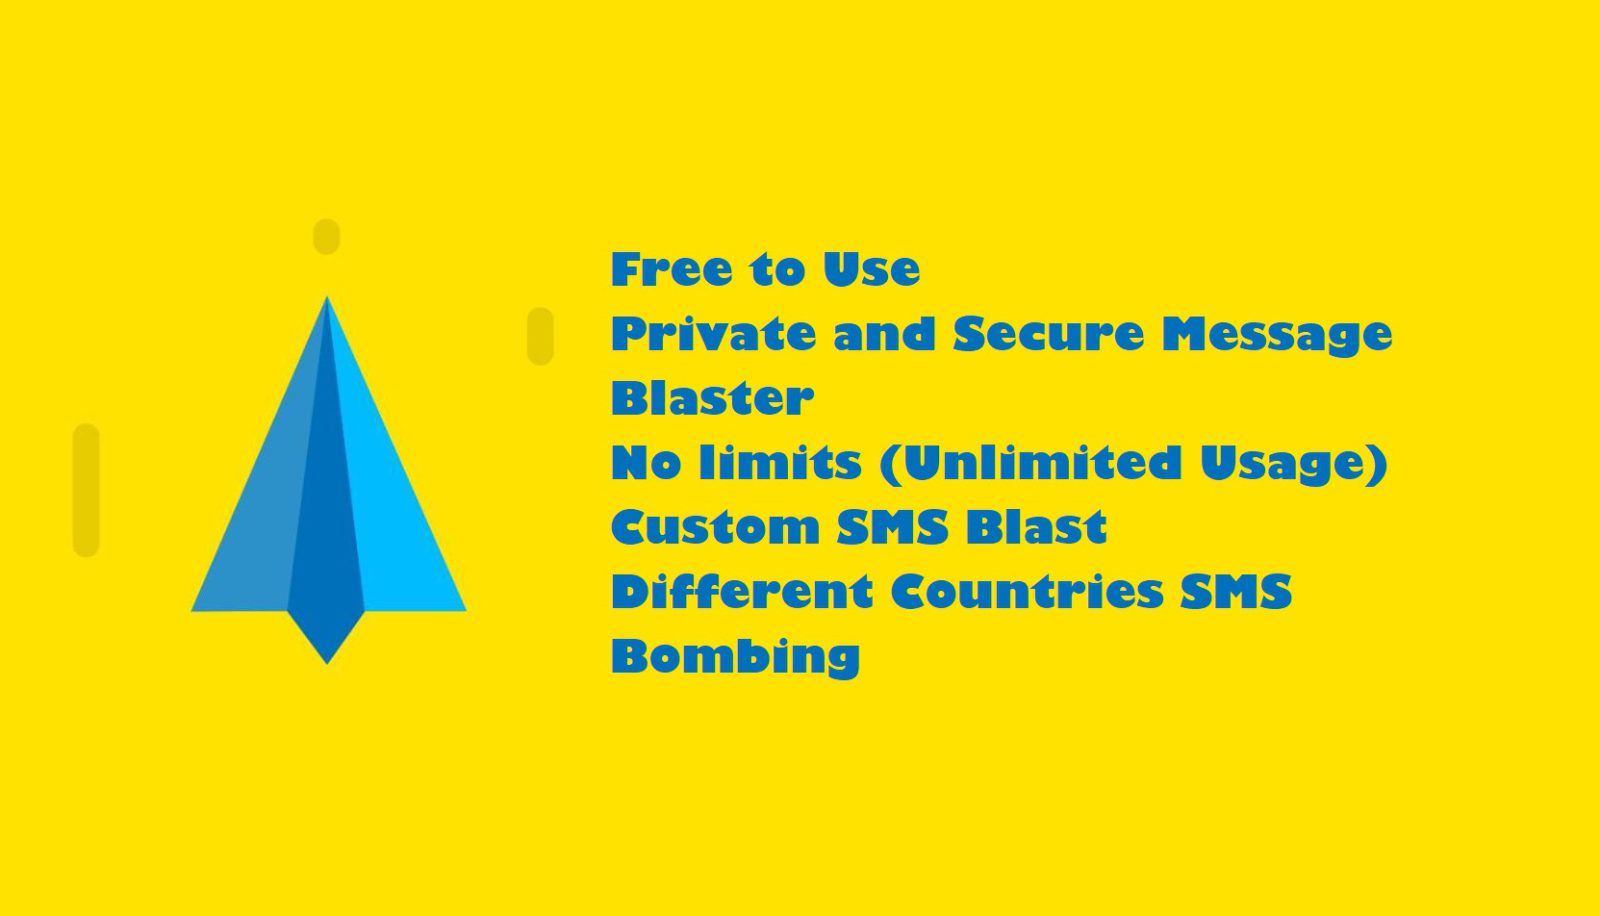 Download free SMS bomber 2020 | Free Online Message Blaster v5.12.20 apk [WhatsApp Spammer]